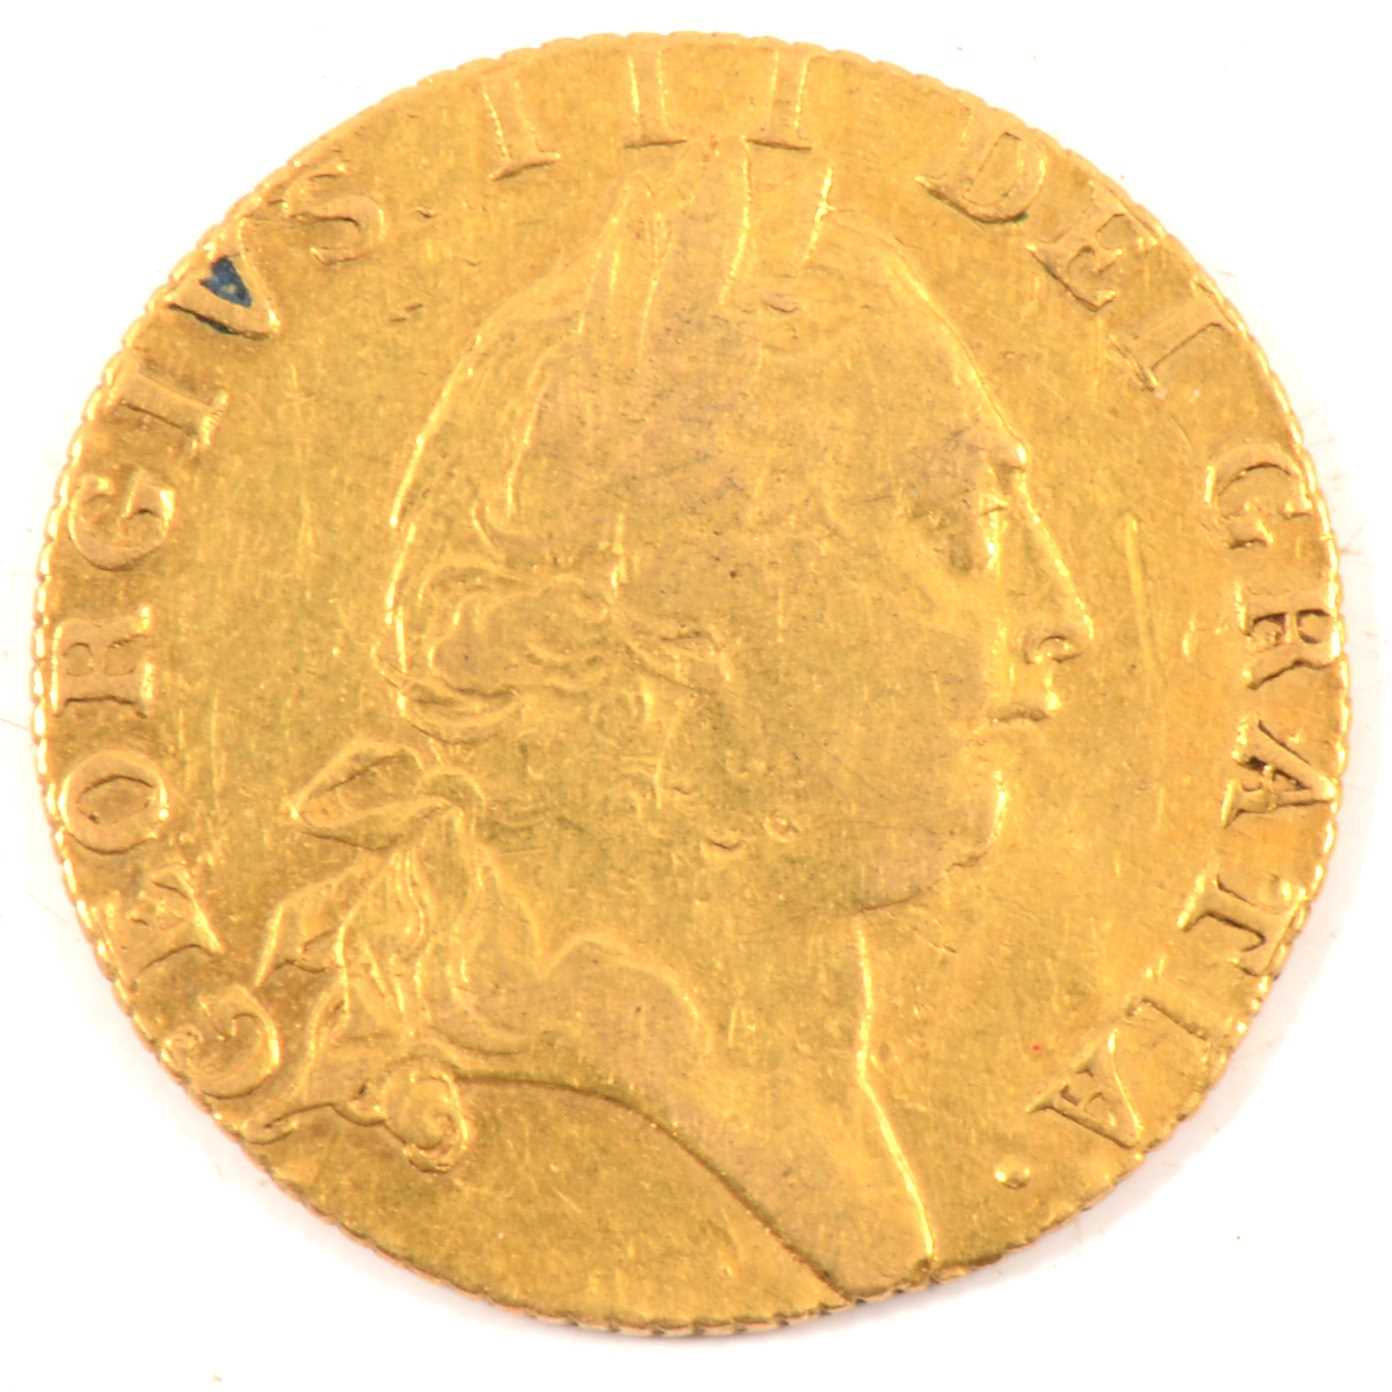 Lot 107 - A Gold Spade Guinea George III 1790.